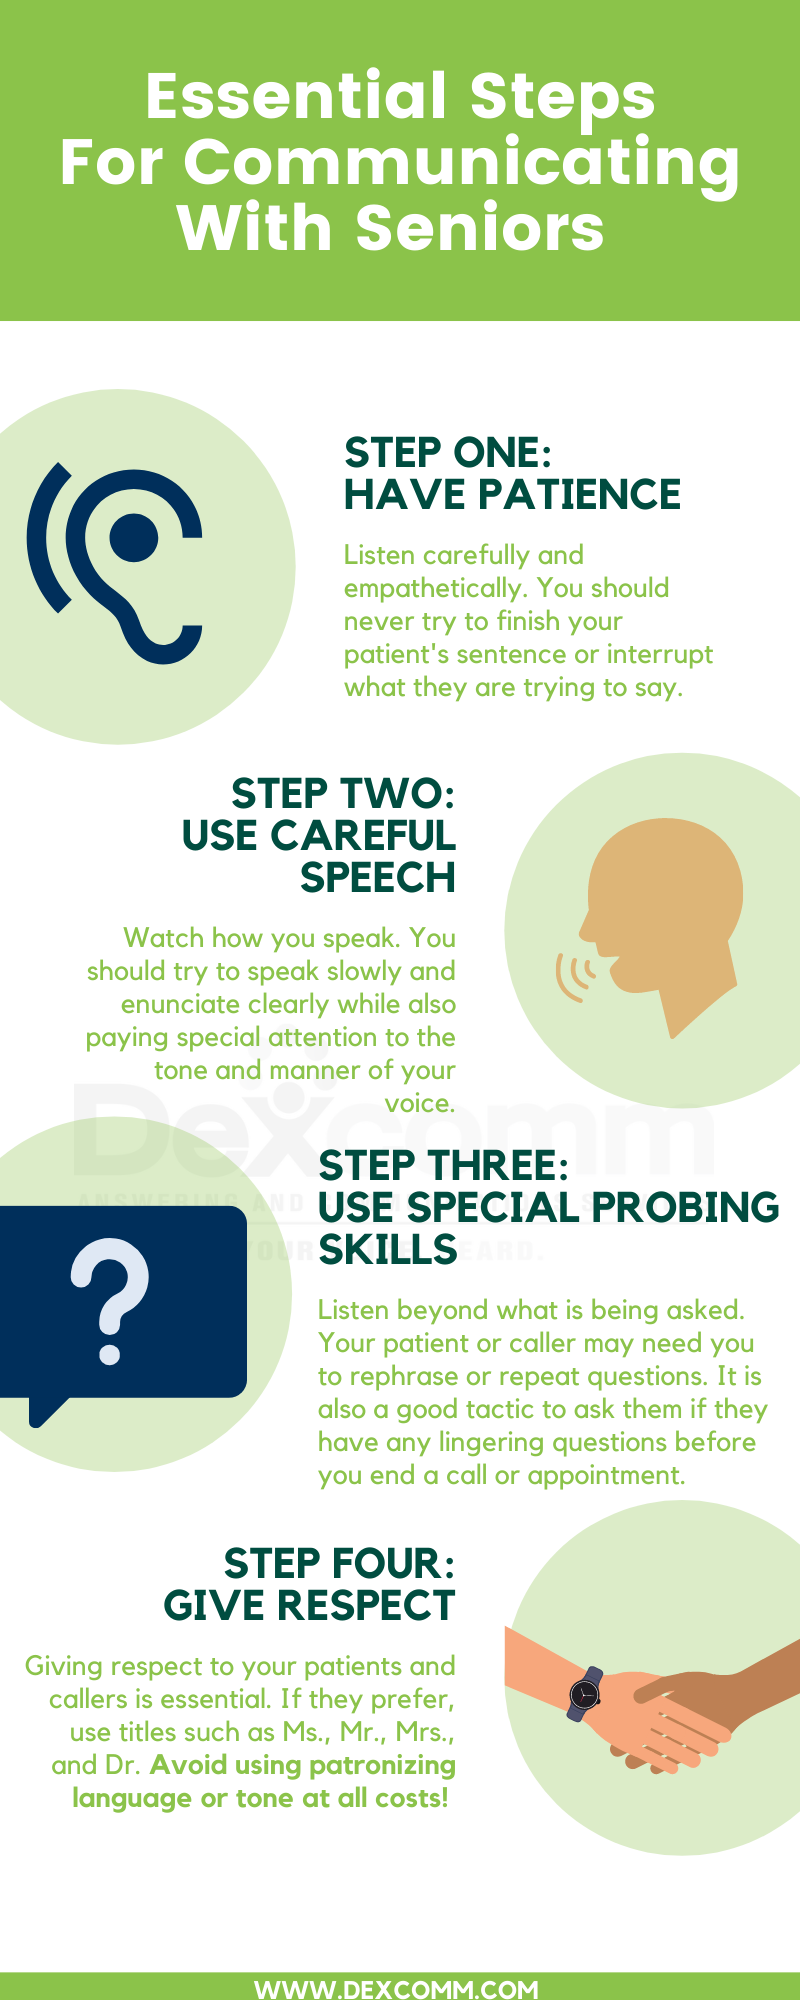 Essential Elements when speaking to elderly callers updated